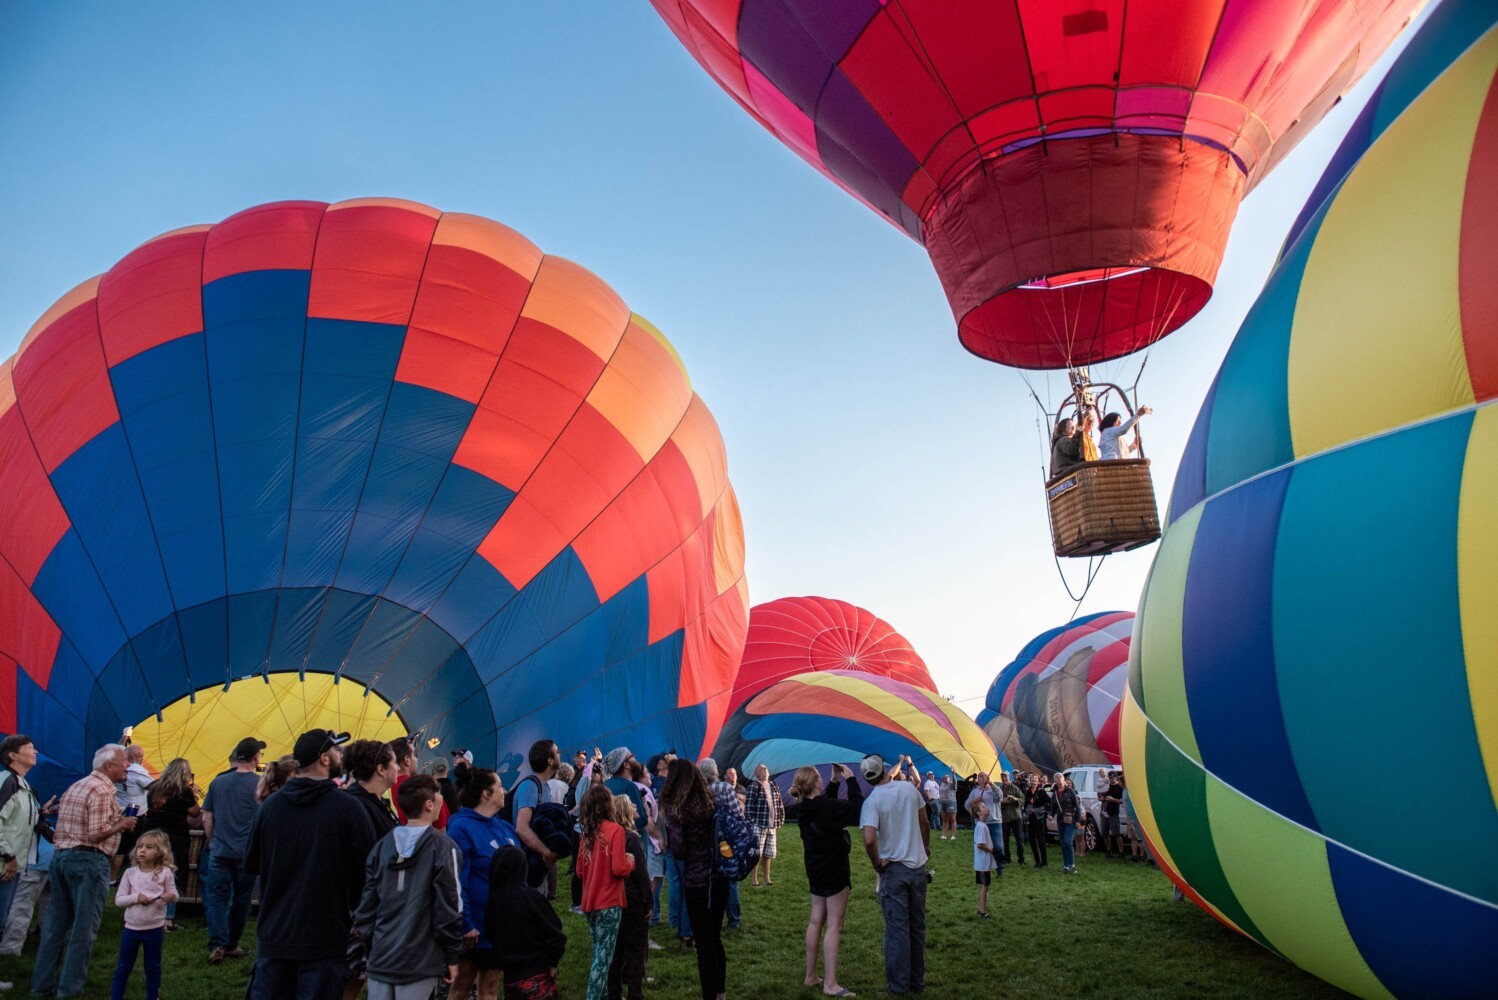 Lewiston, Auburn say balloon festival will ‘take off’ with municipal leadership